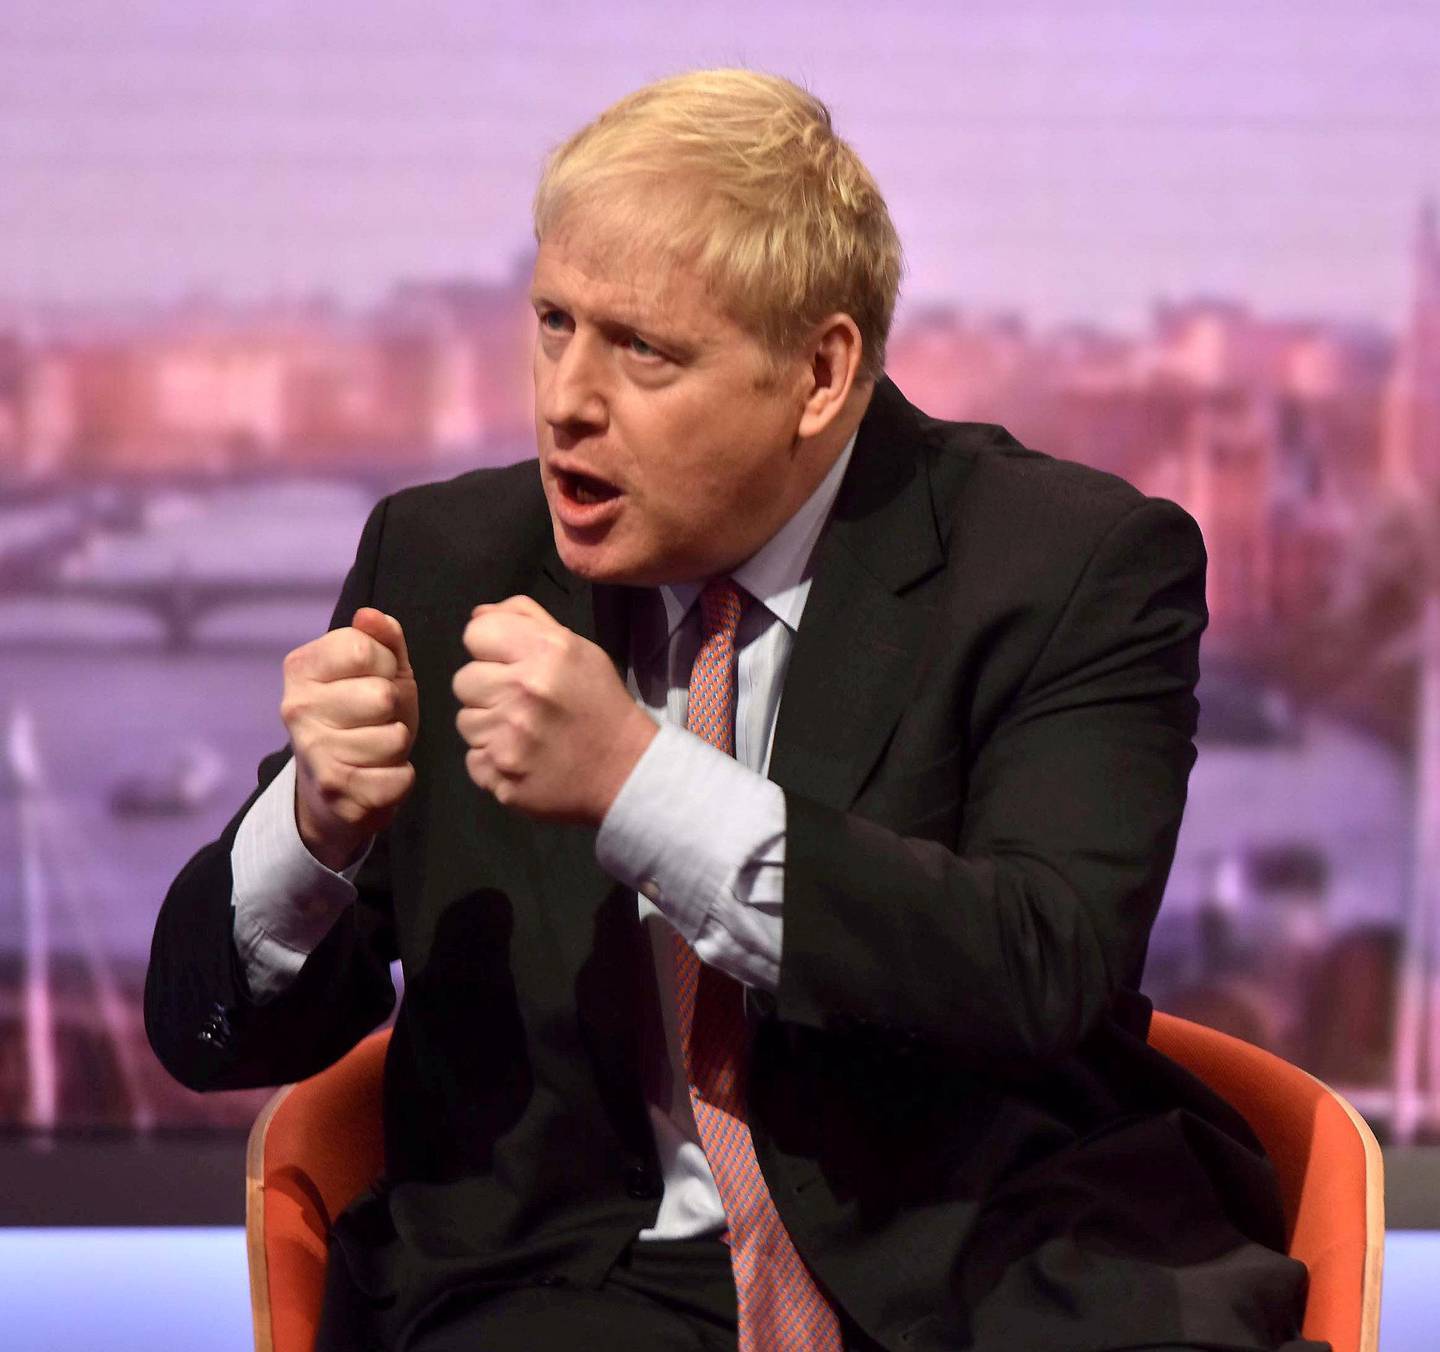 SJEFKRITIKEREN: Boris Johnson har banket inn hard kritikk mot Theresa May i hele høst. FOTO: NTB SCANPIX